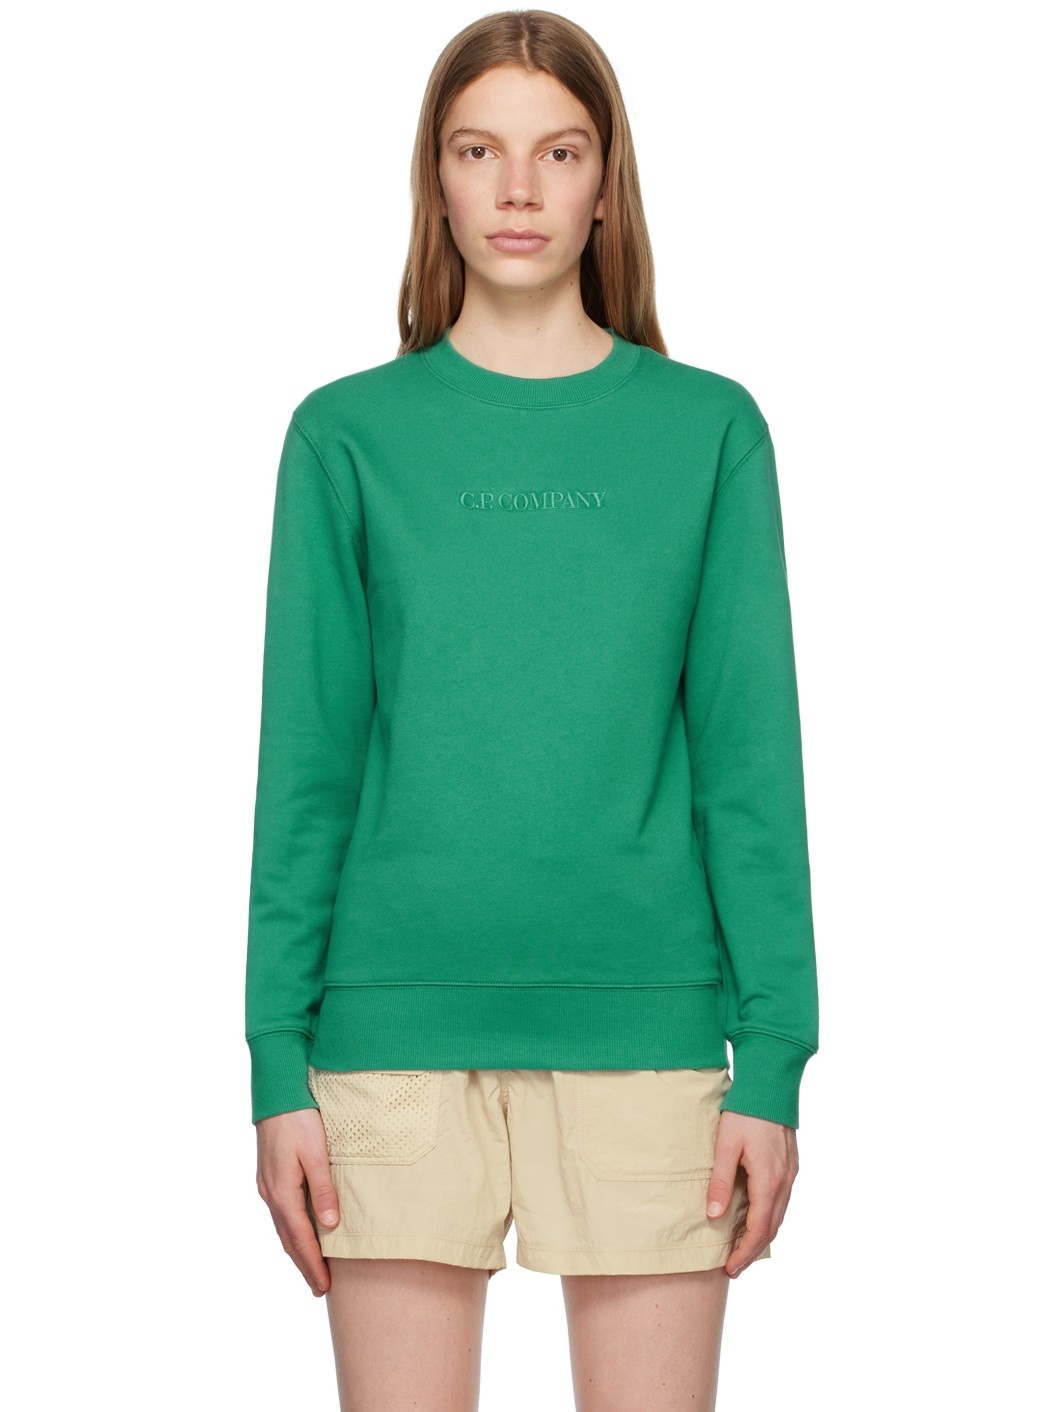 Green Embroidered Sweatshirt - 1